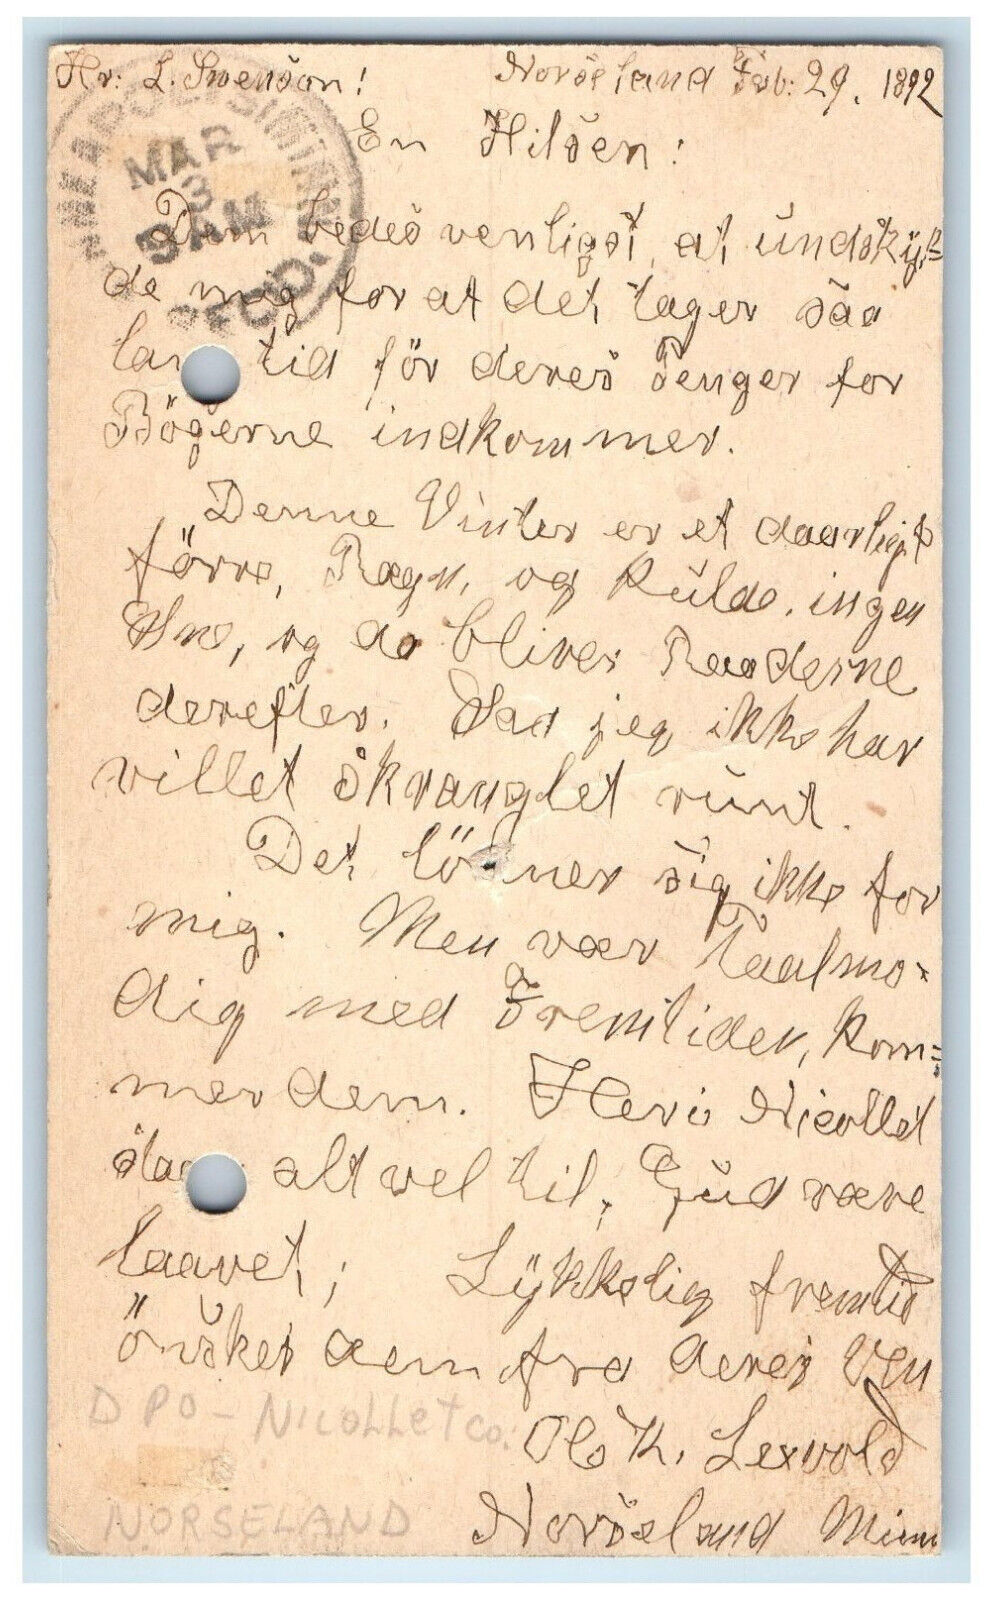 1892 Norseland Minnesota MN Minneapolis MN DPO Posted Antique Postal Card